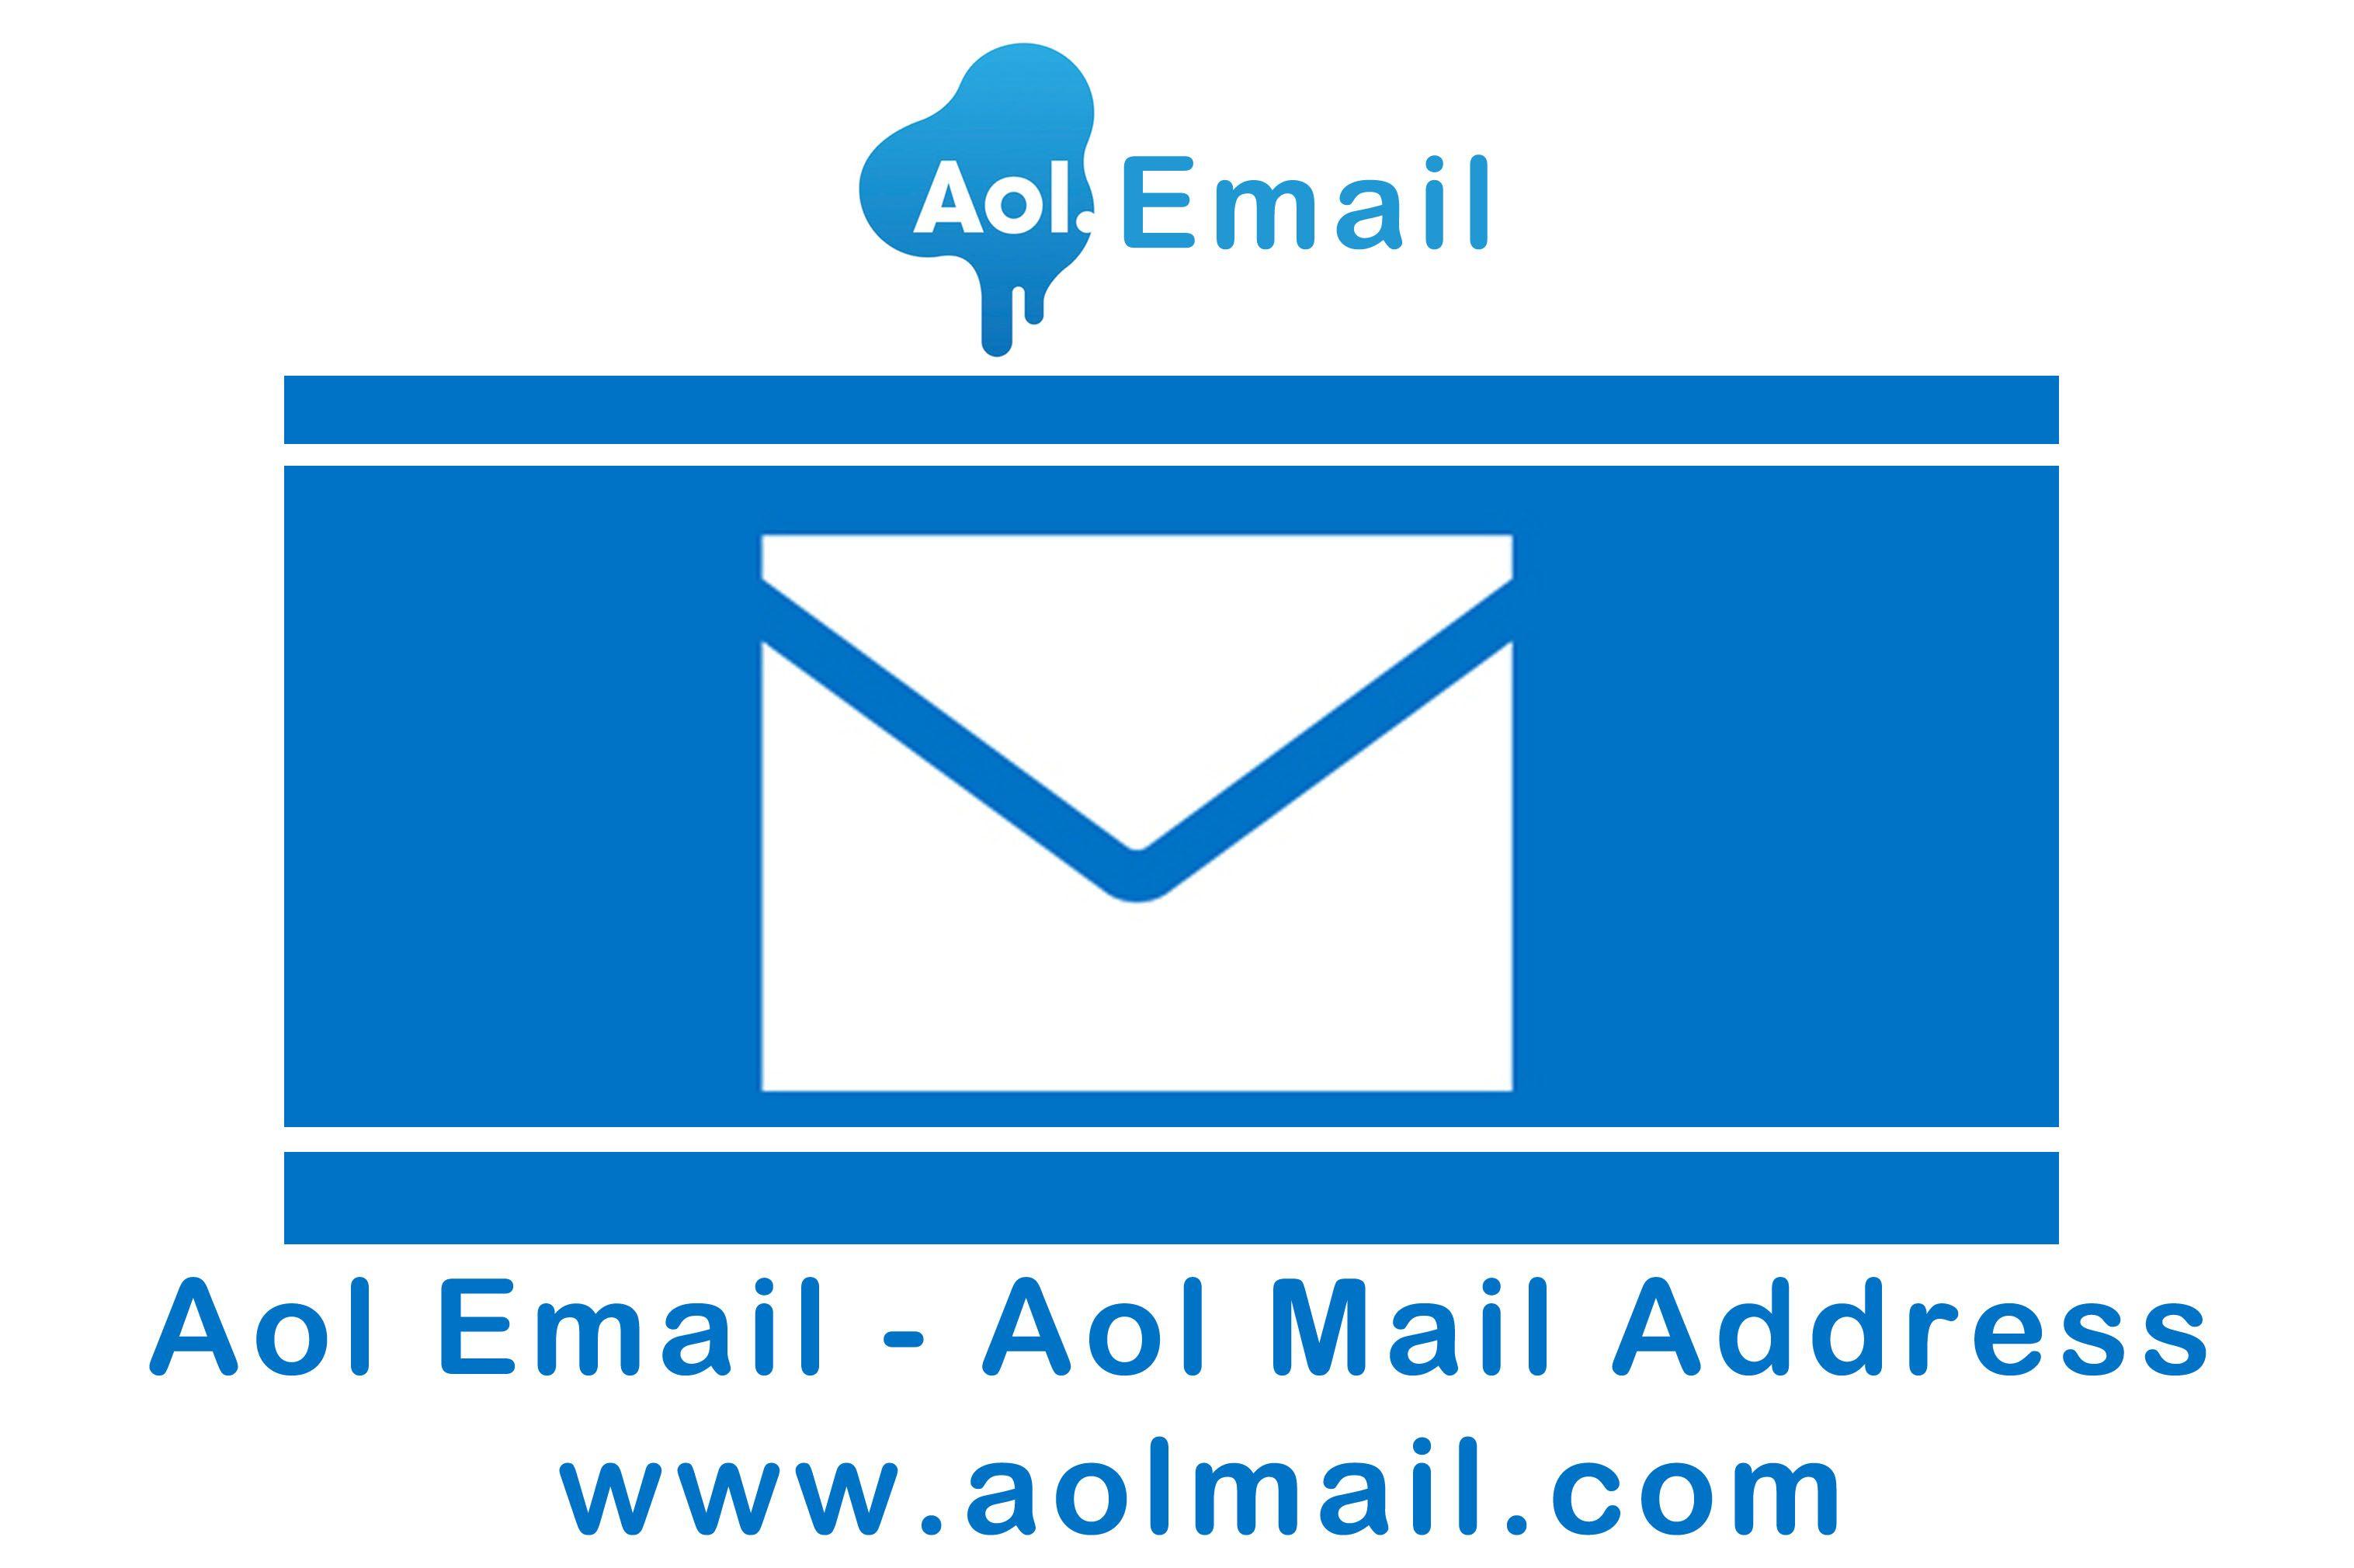 AOL Email Logo - Aol Email Mail Address